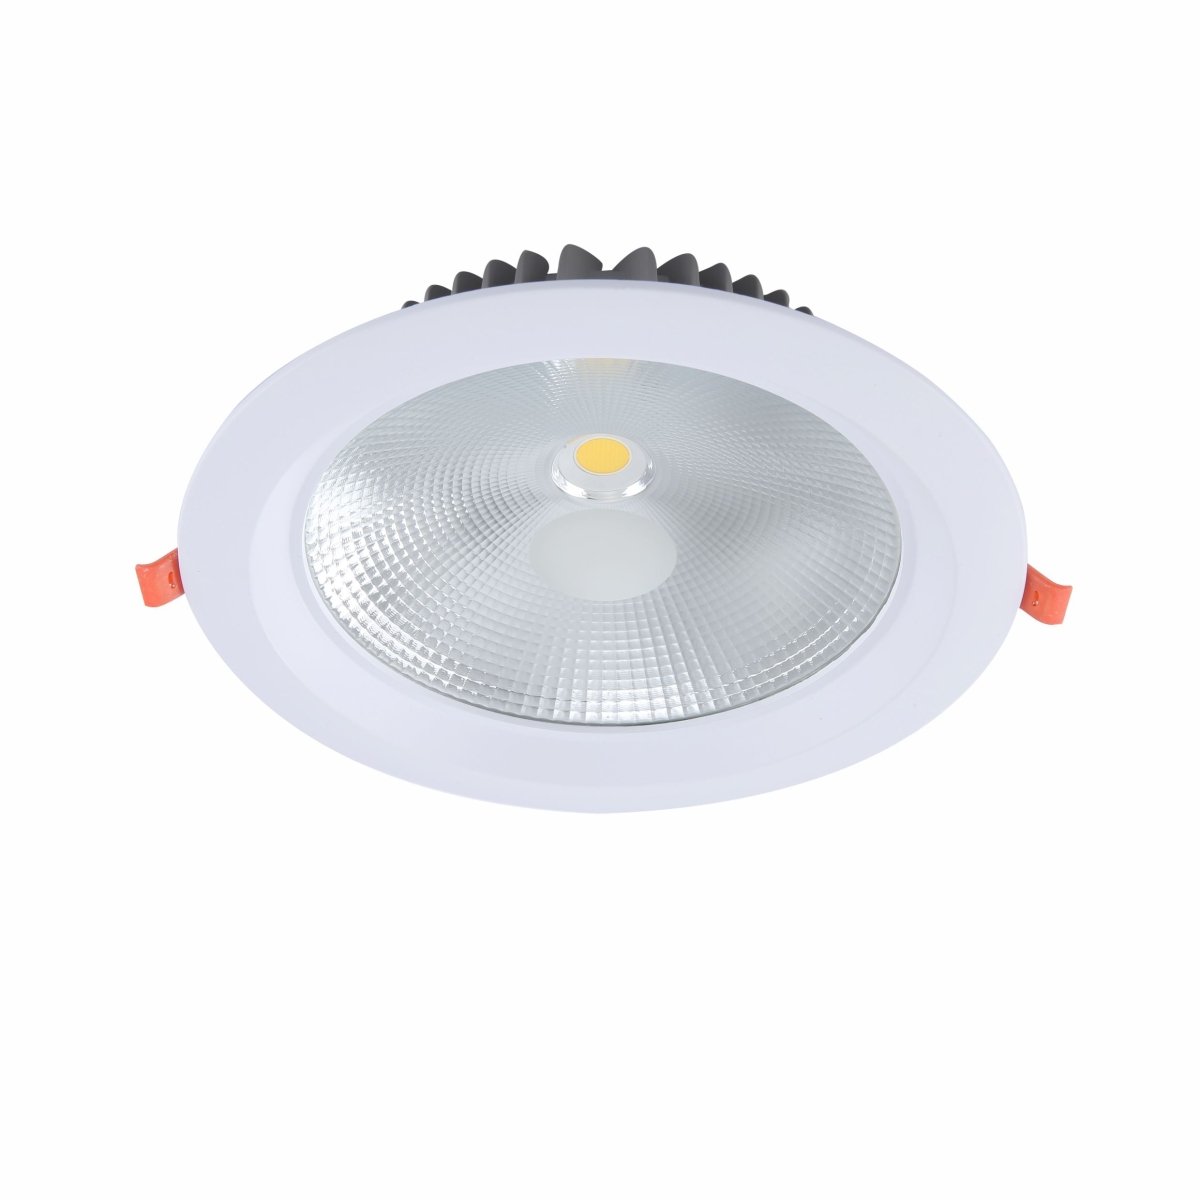 Main image of LED COB Recessed Downlight 30W Cool White 4000K White | TEKLED 165-034031